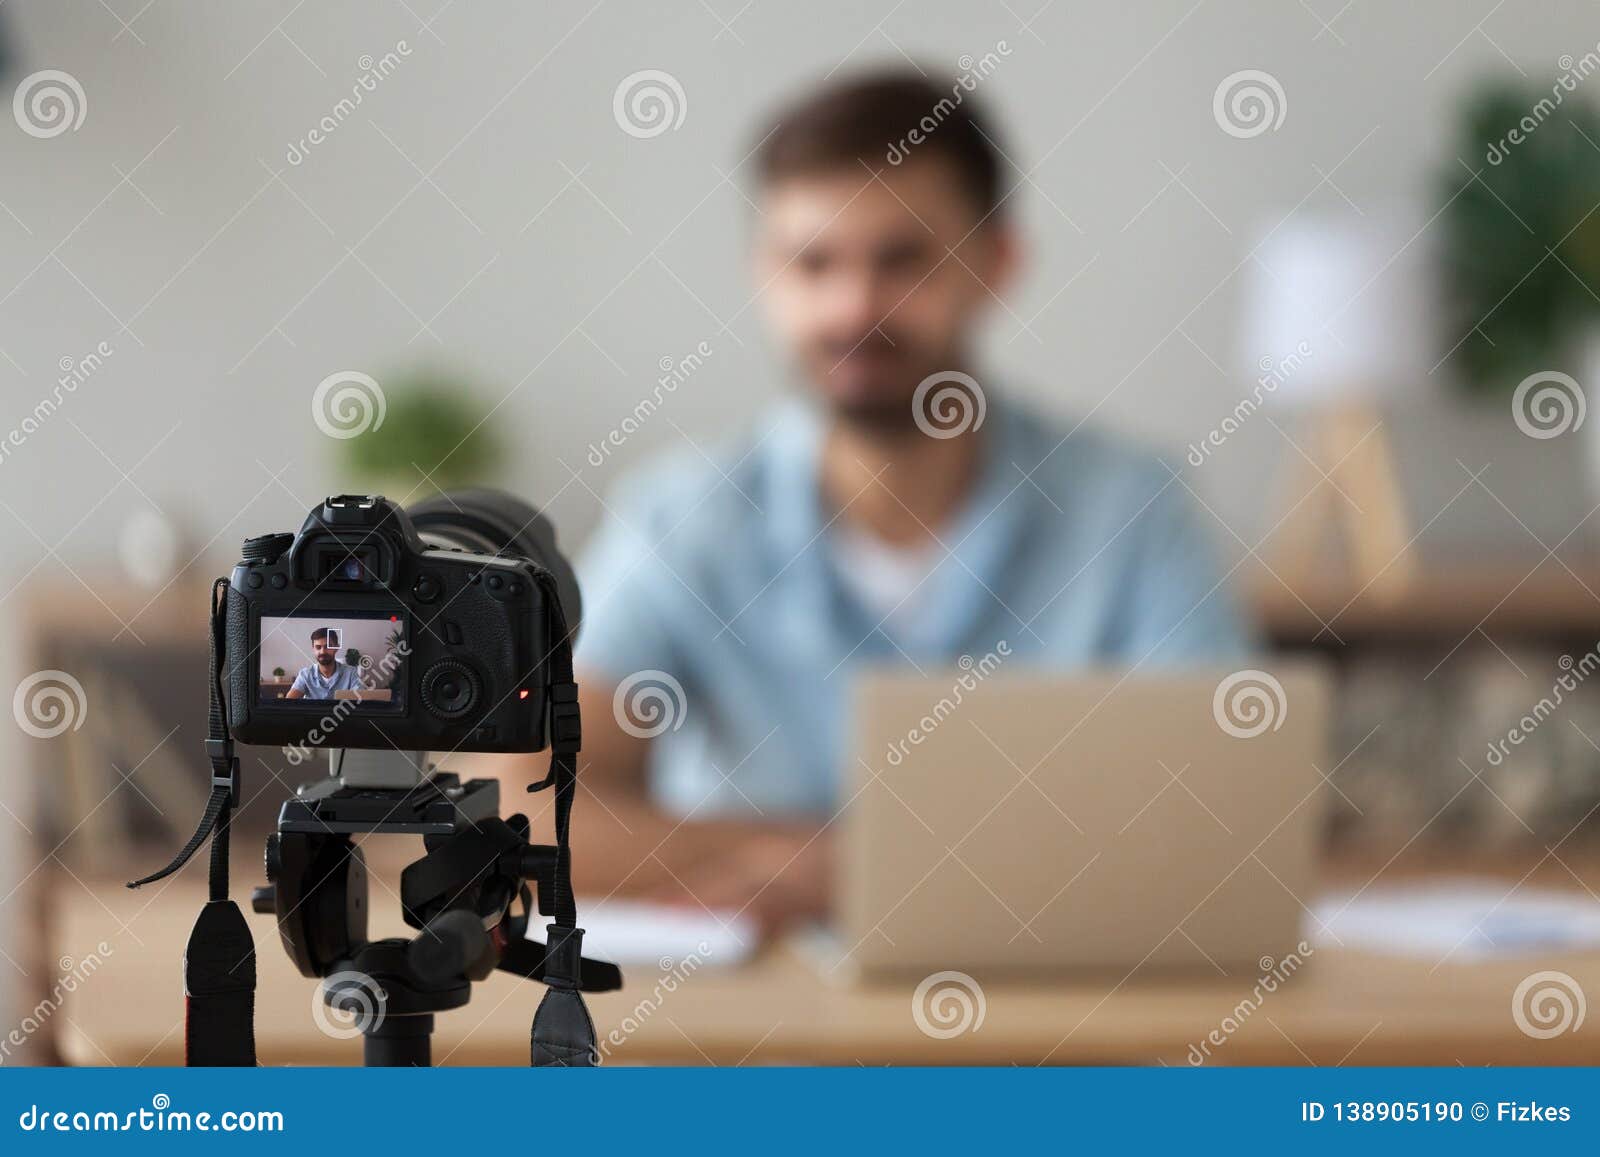 digital camera filming commercial vlog of man teacher vlogger coach